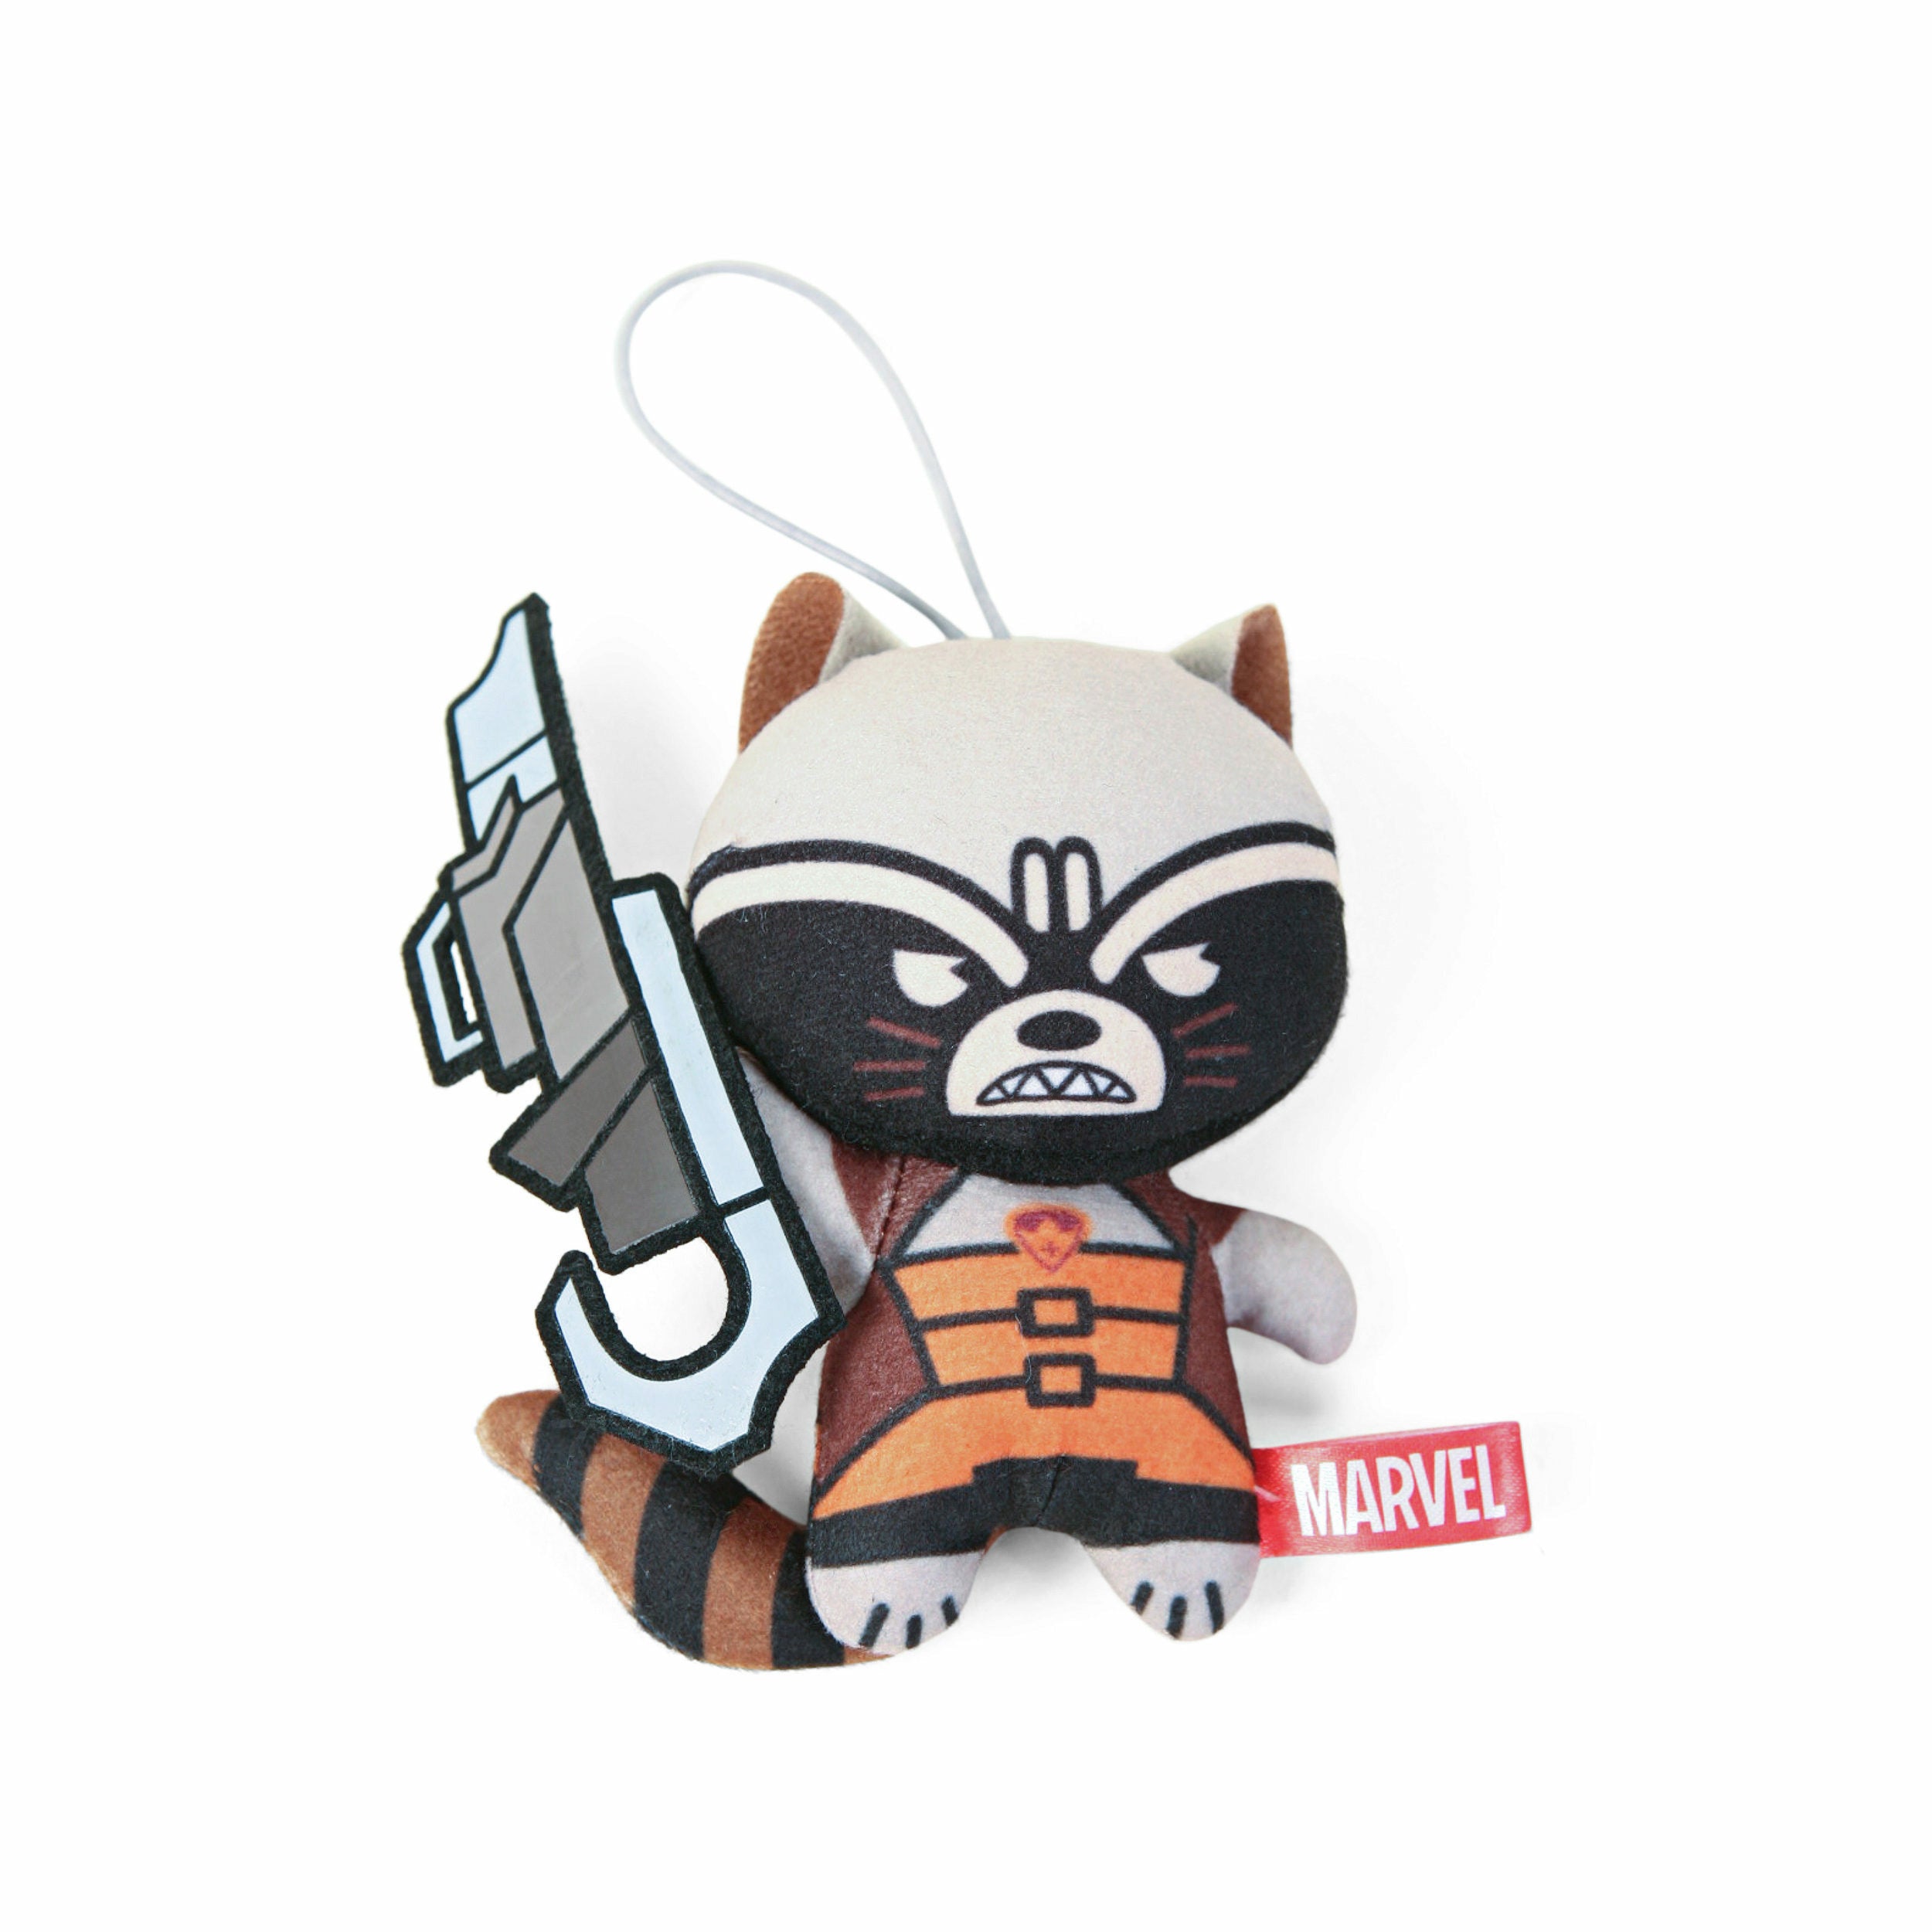 Marvel Kawaii Art Collection Ver. 2 Rocket Raccoon Plush Toy